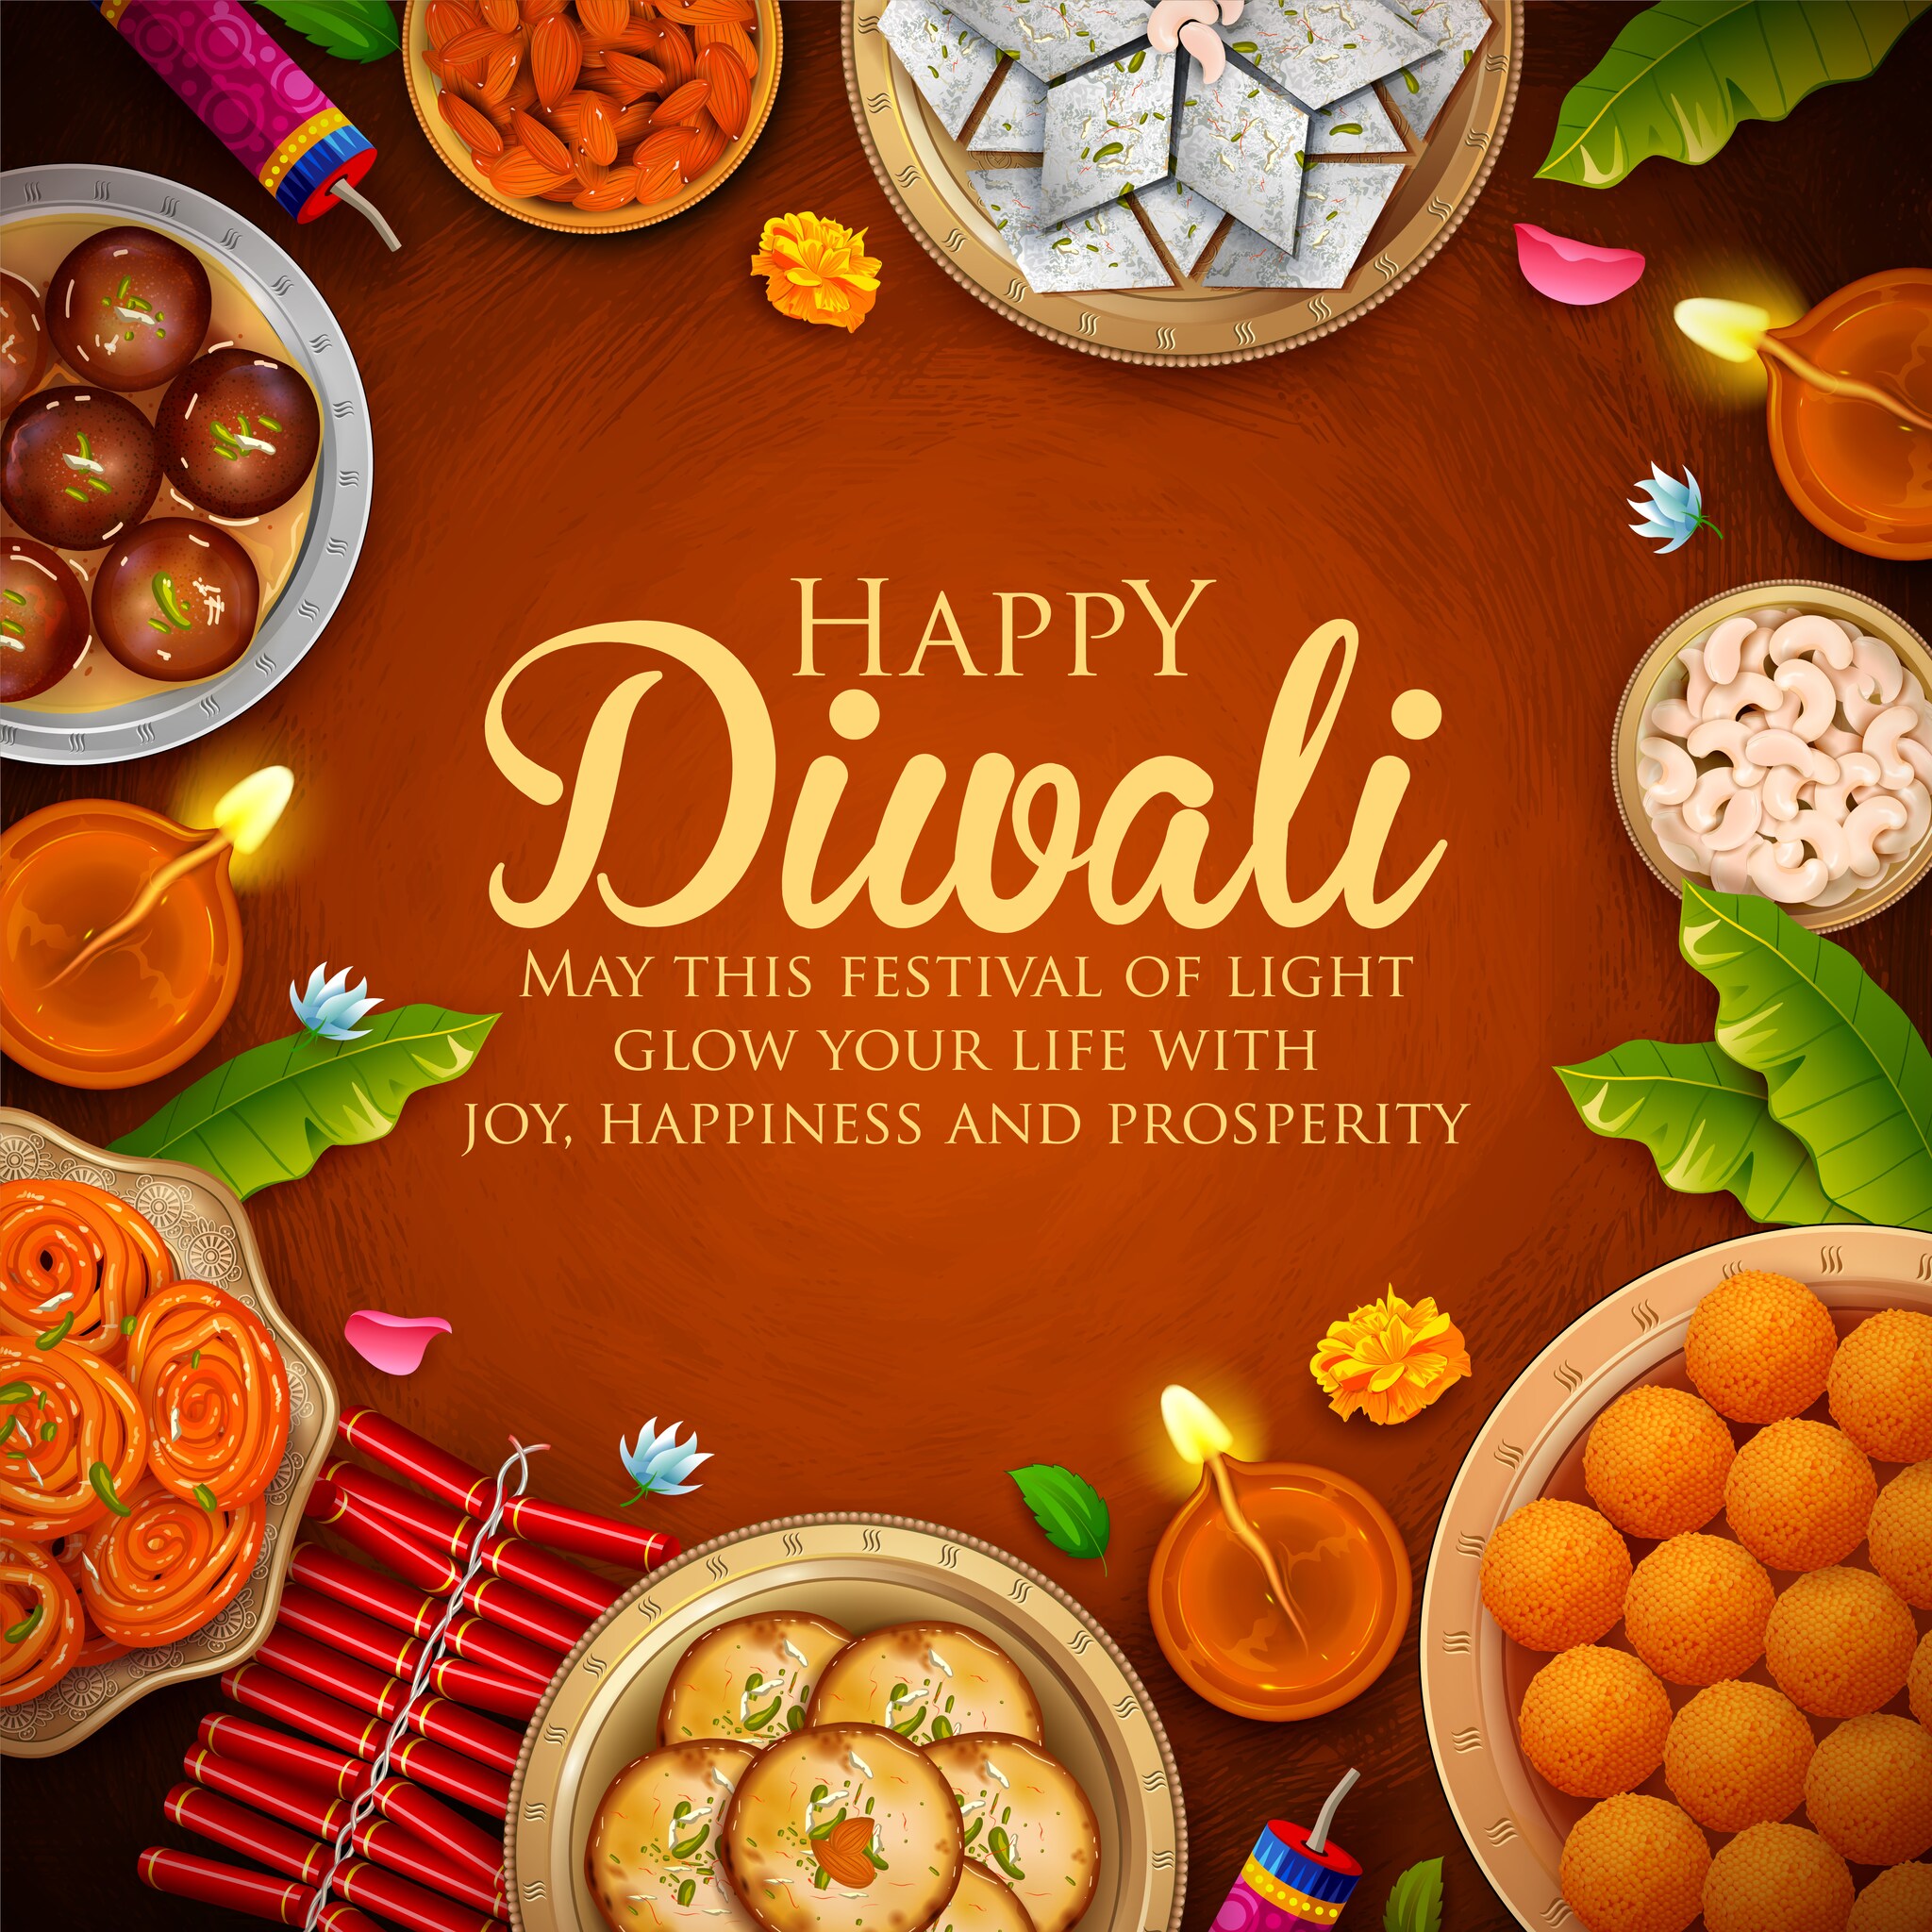 Diwali 2022: This year Lakshmi Puja is on October 24. (Representative image: Shutterstock)